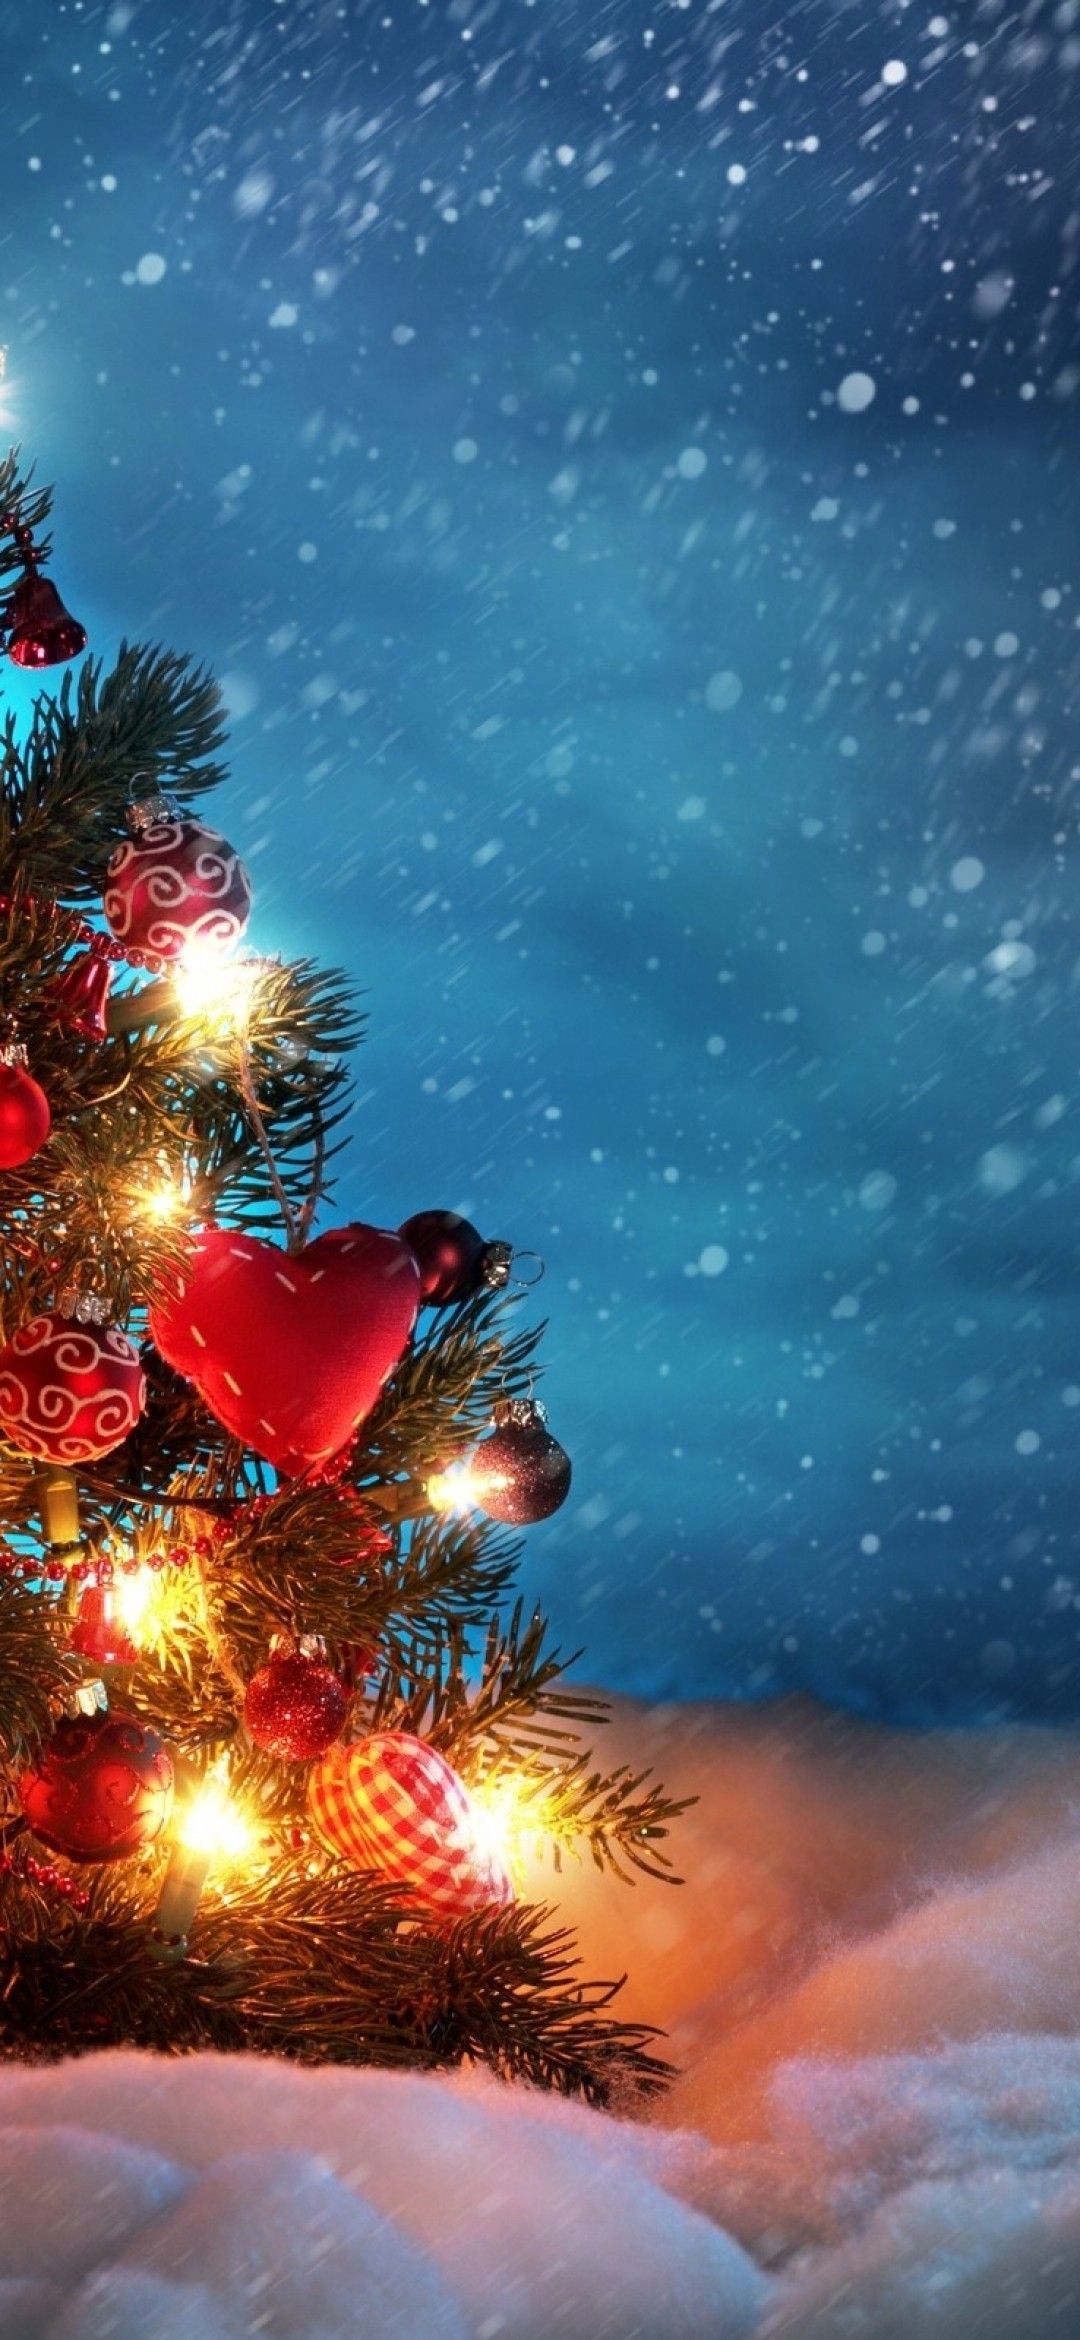 Download 1080x2340 Christmas Tree, Lights, Snow, Winter Wallpaper for Xiaomi Mi 9 & Mi Mix 3 & Black Shark Vivo V15 Pro, OnePlus 6T, Huawei Y9 2019